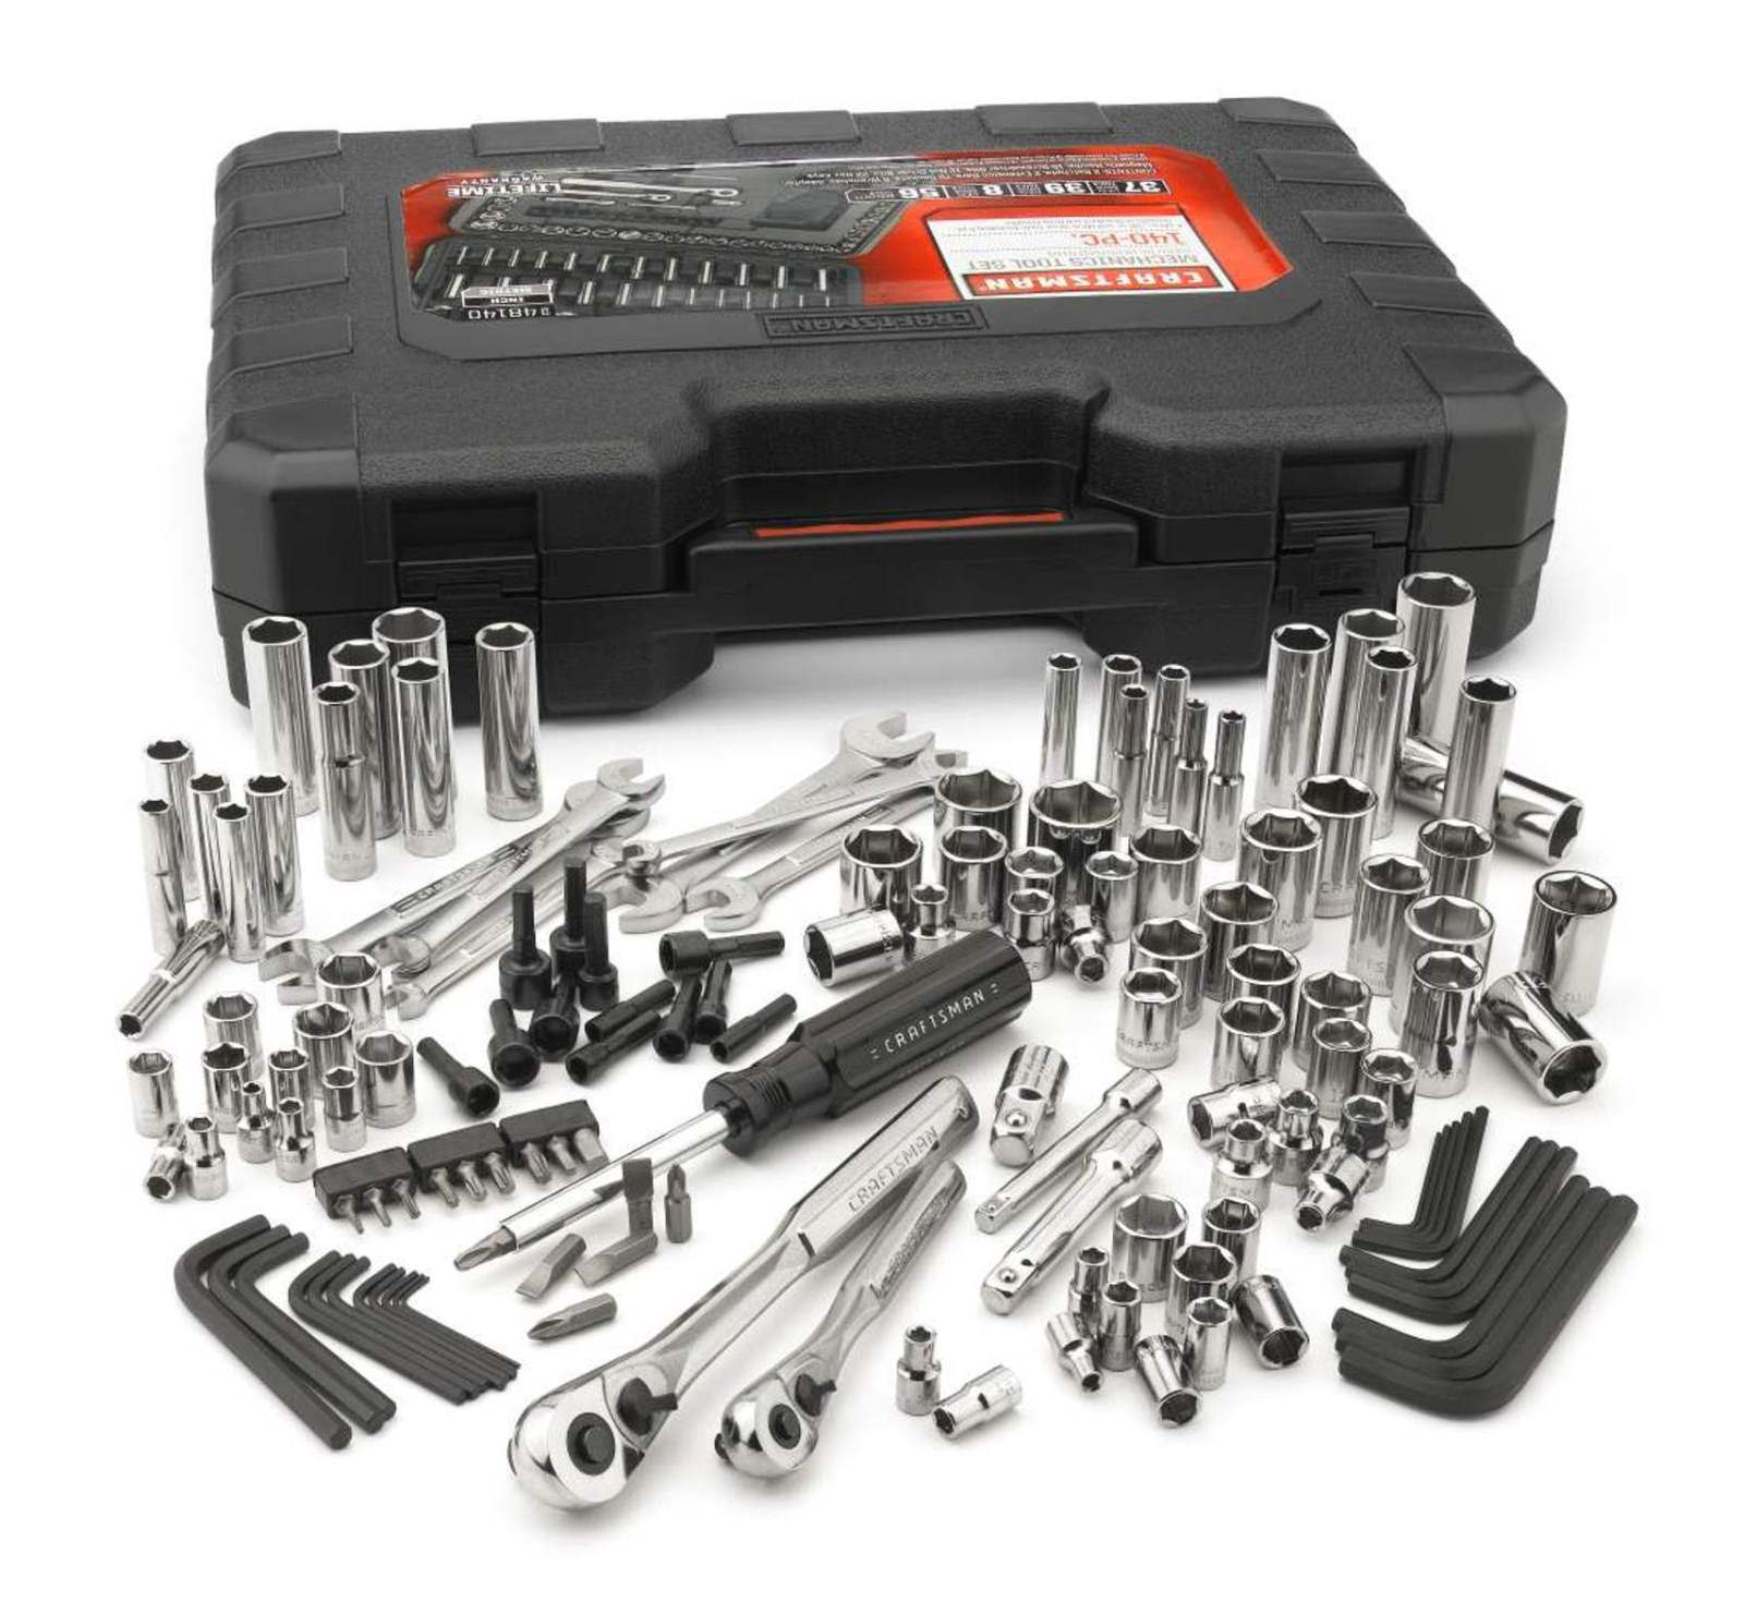 *Father’s Day Gift Alert* Craftsman 140-piece Mechanics Tool Set $69.99